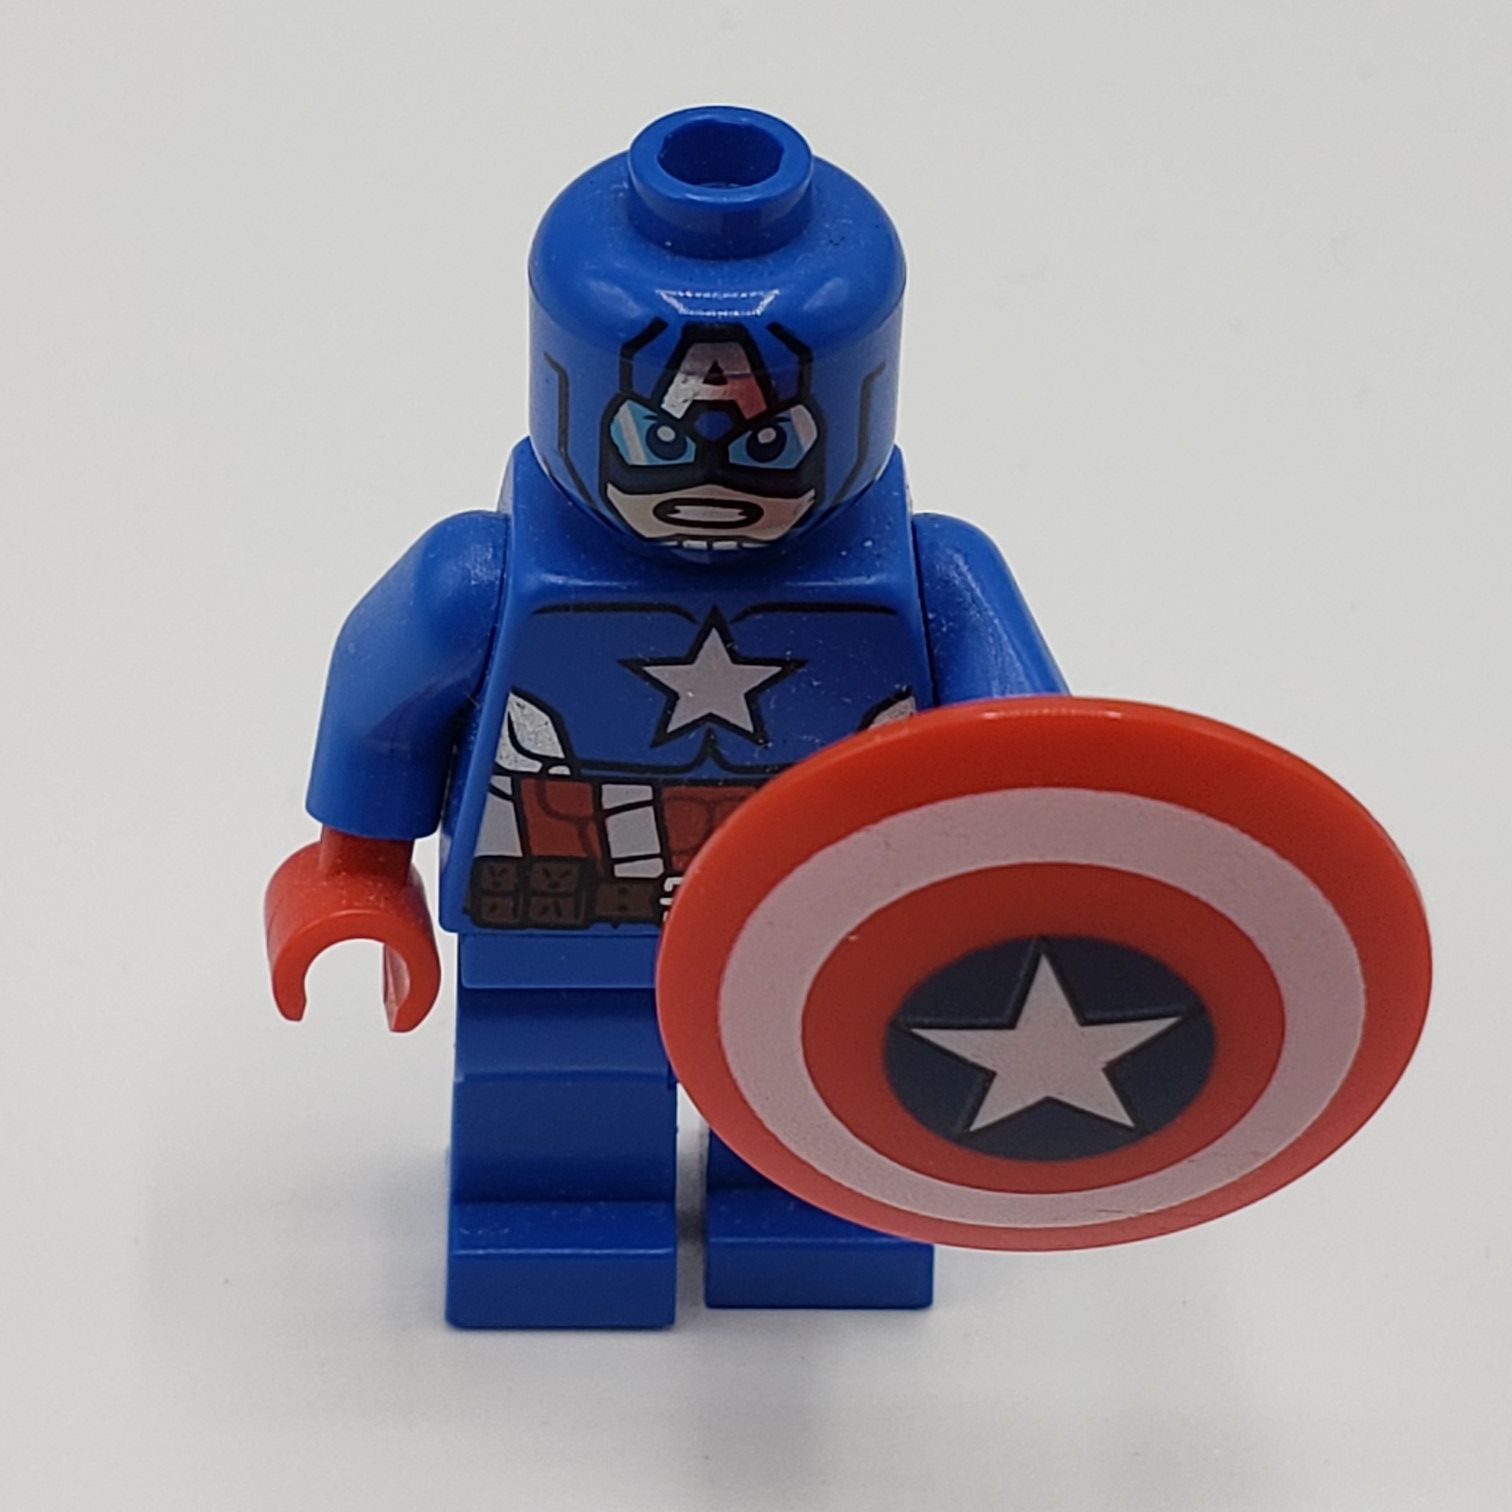 Lego Captain America Minifigure